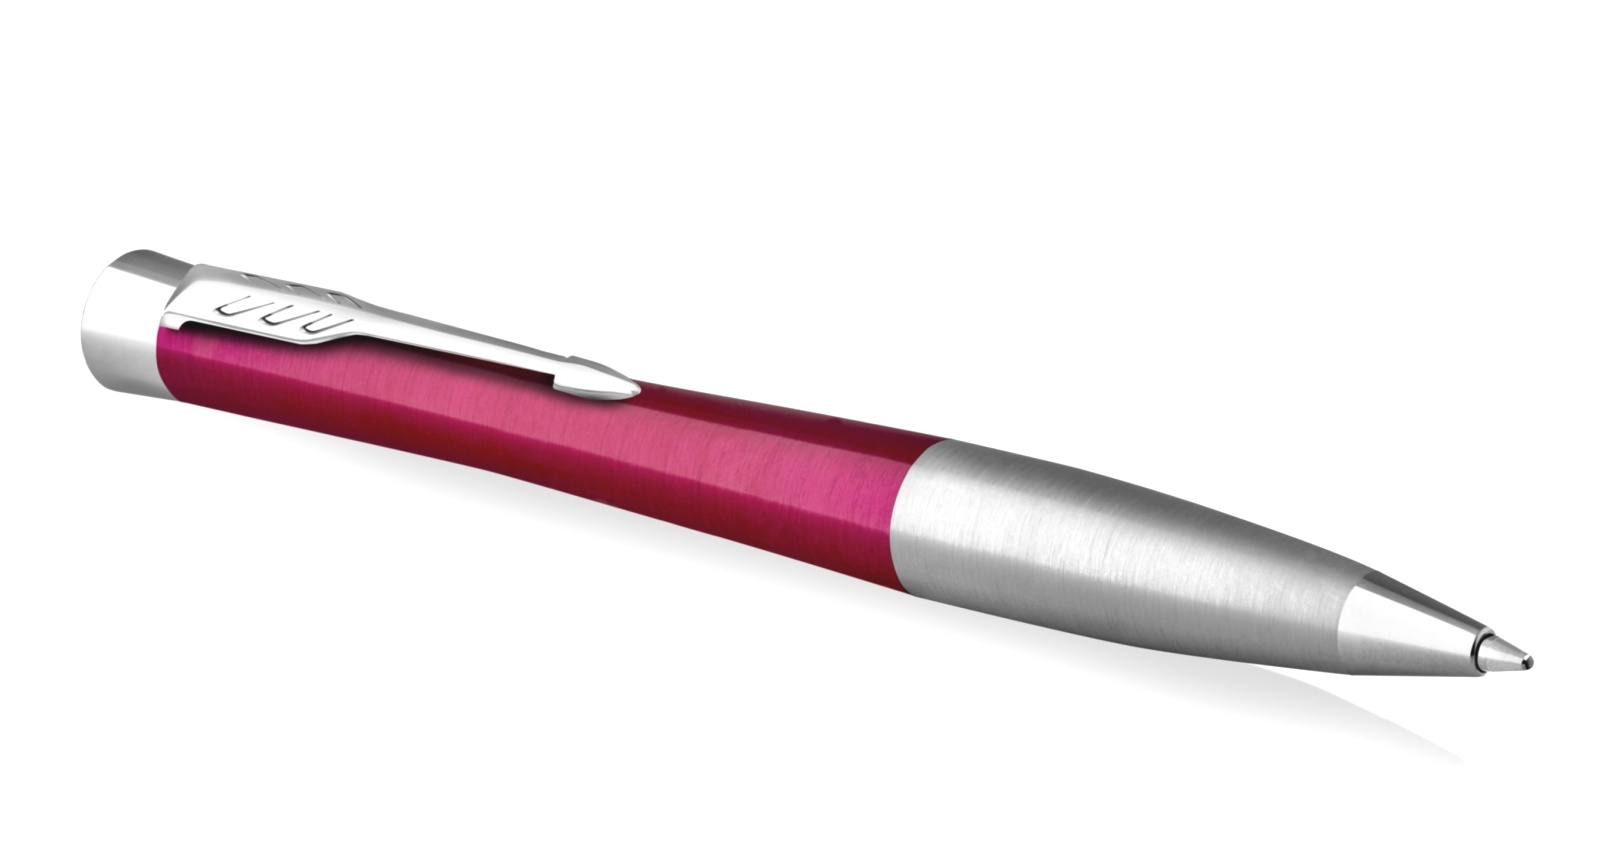  Ручка шариковая Parker Urban Core K314, Vibrant Magenta CT, фото 2